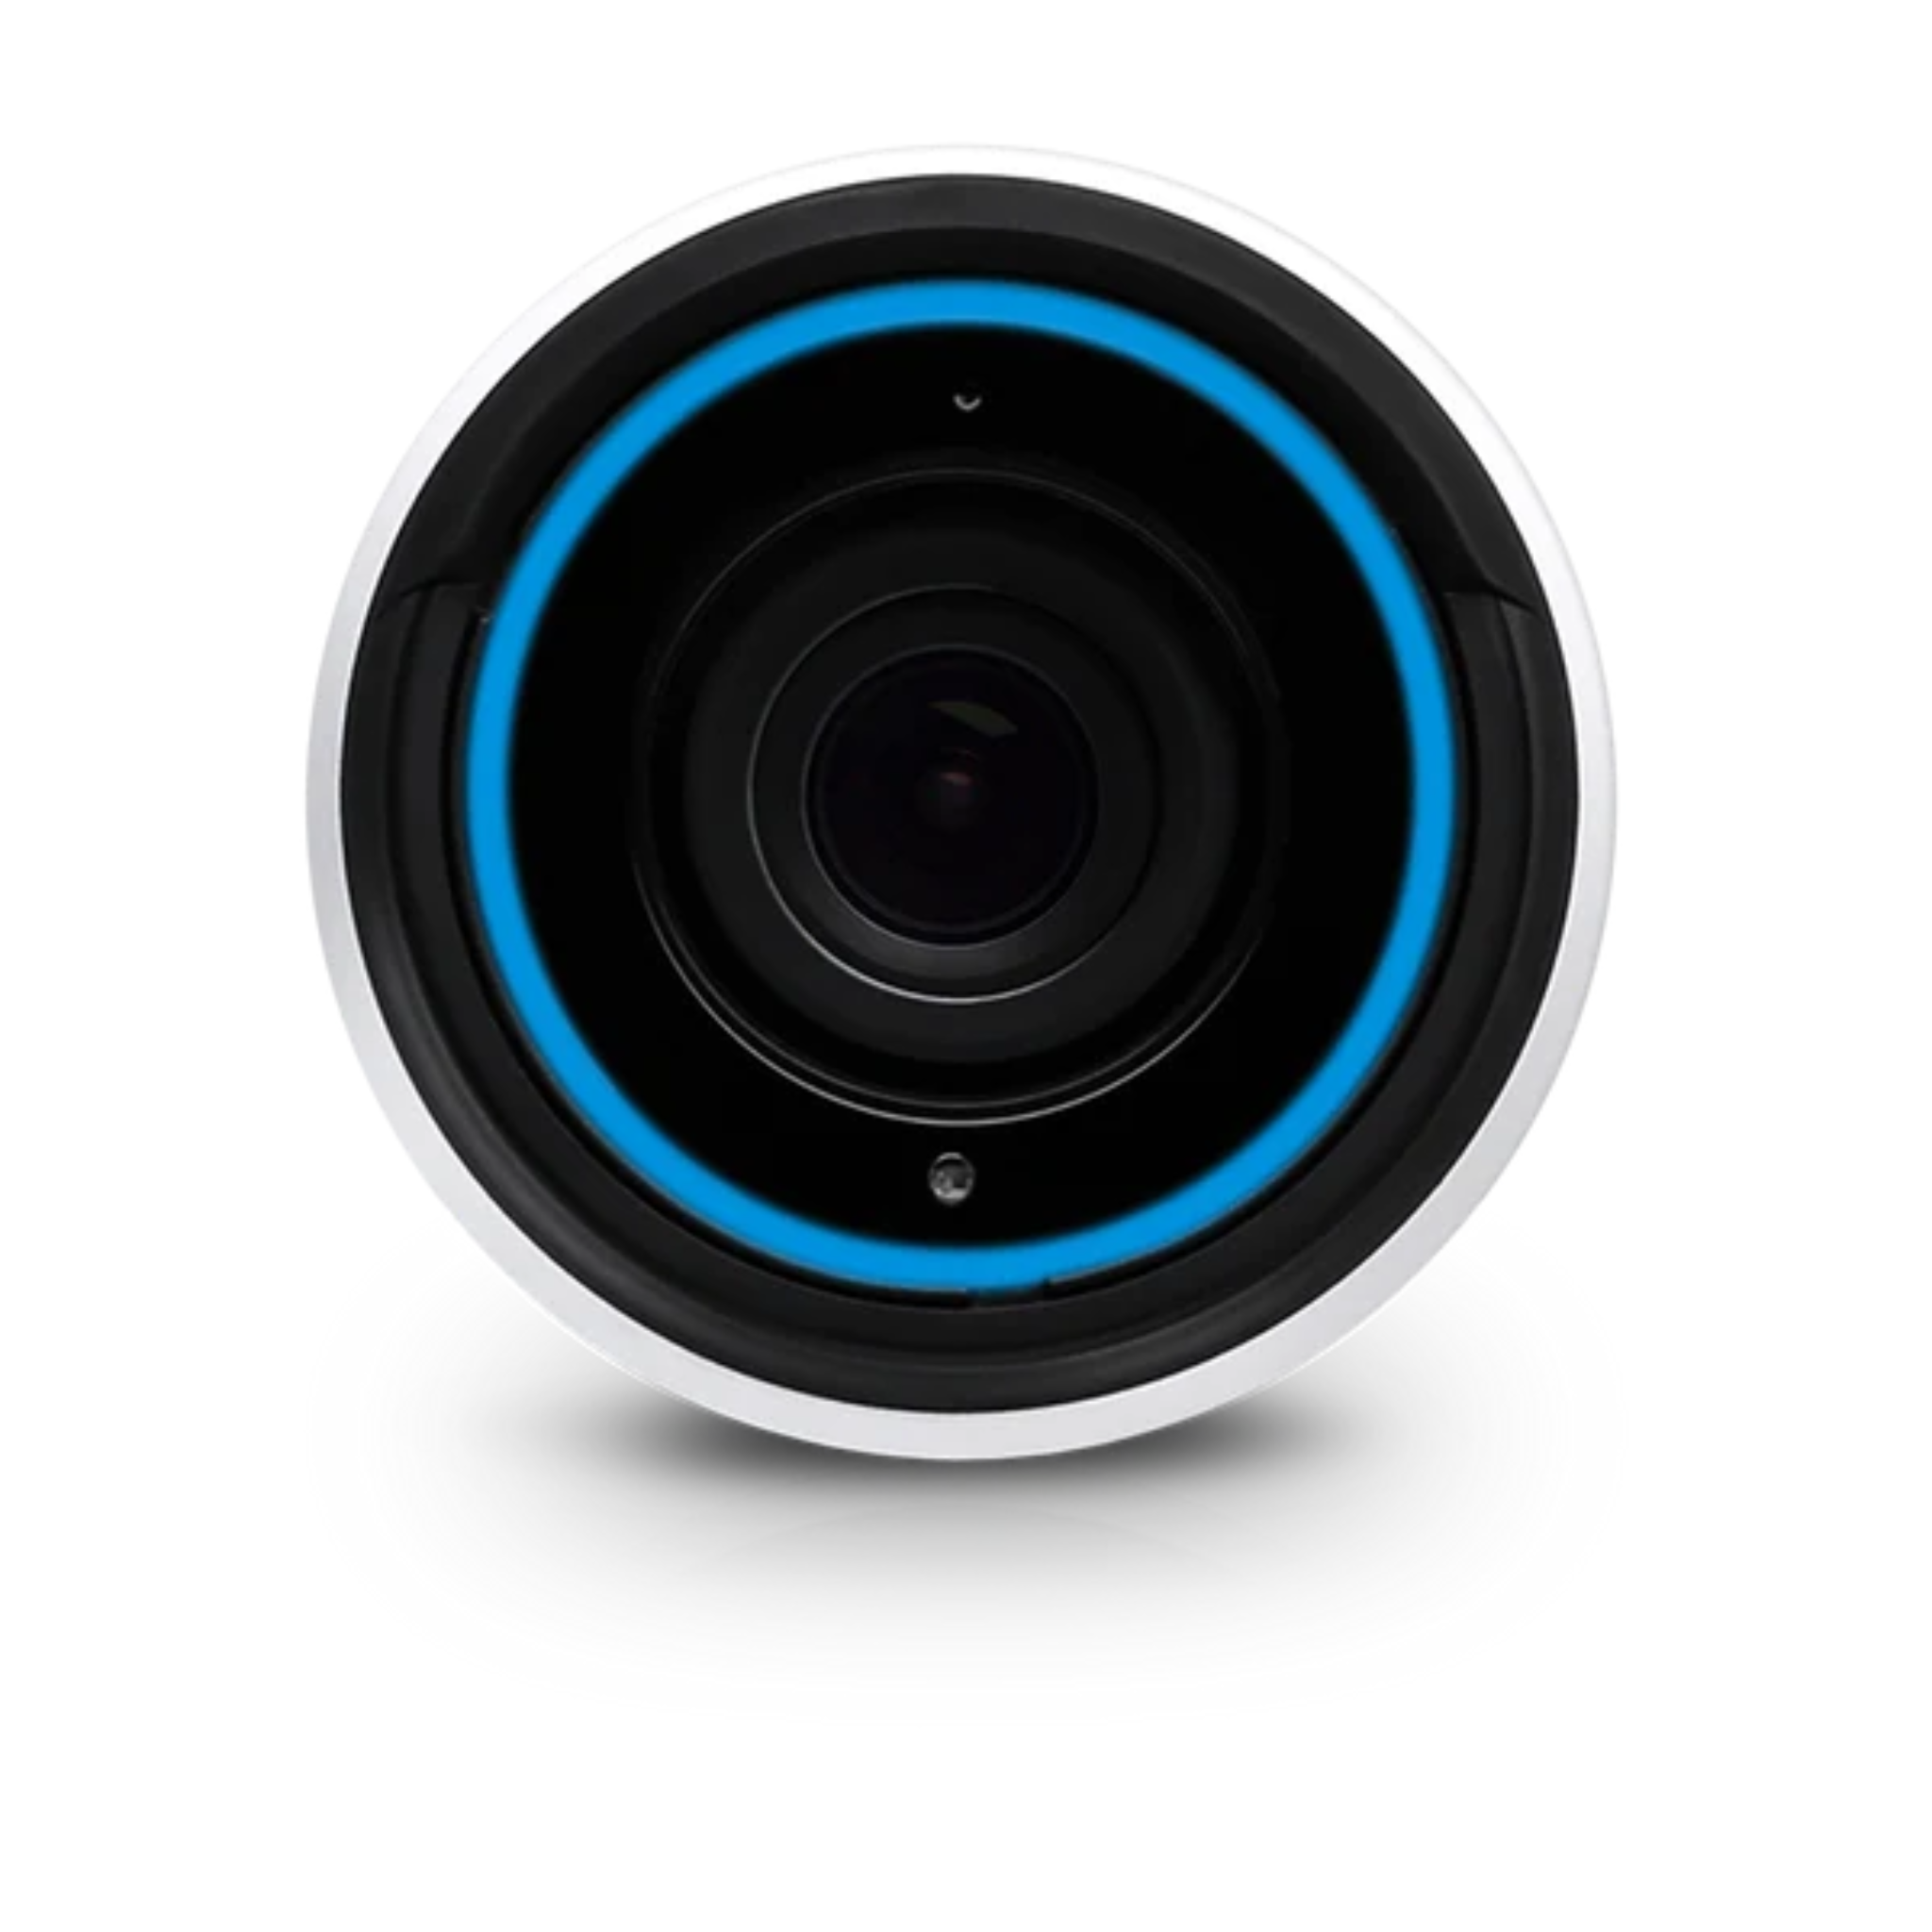 Unifi Camera G4 Pro - 4K IP65 3 x Optical Zoom